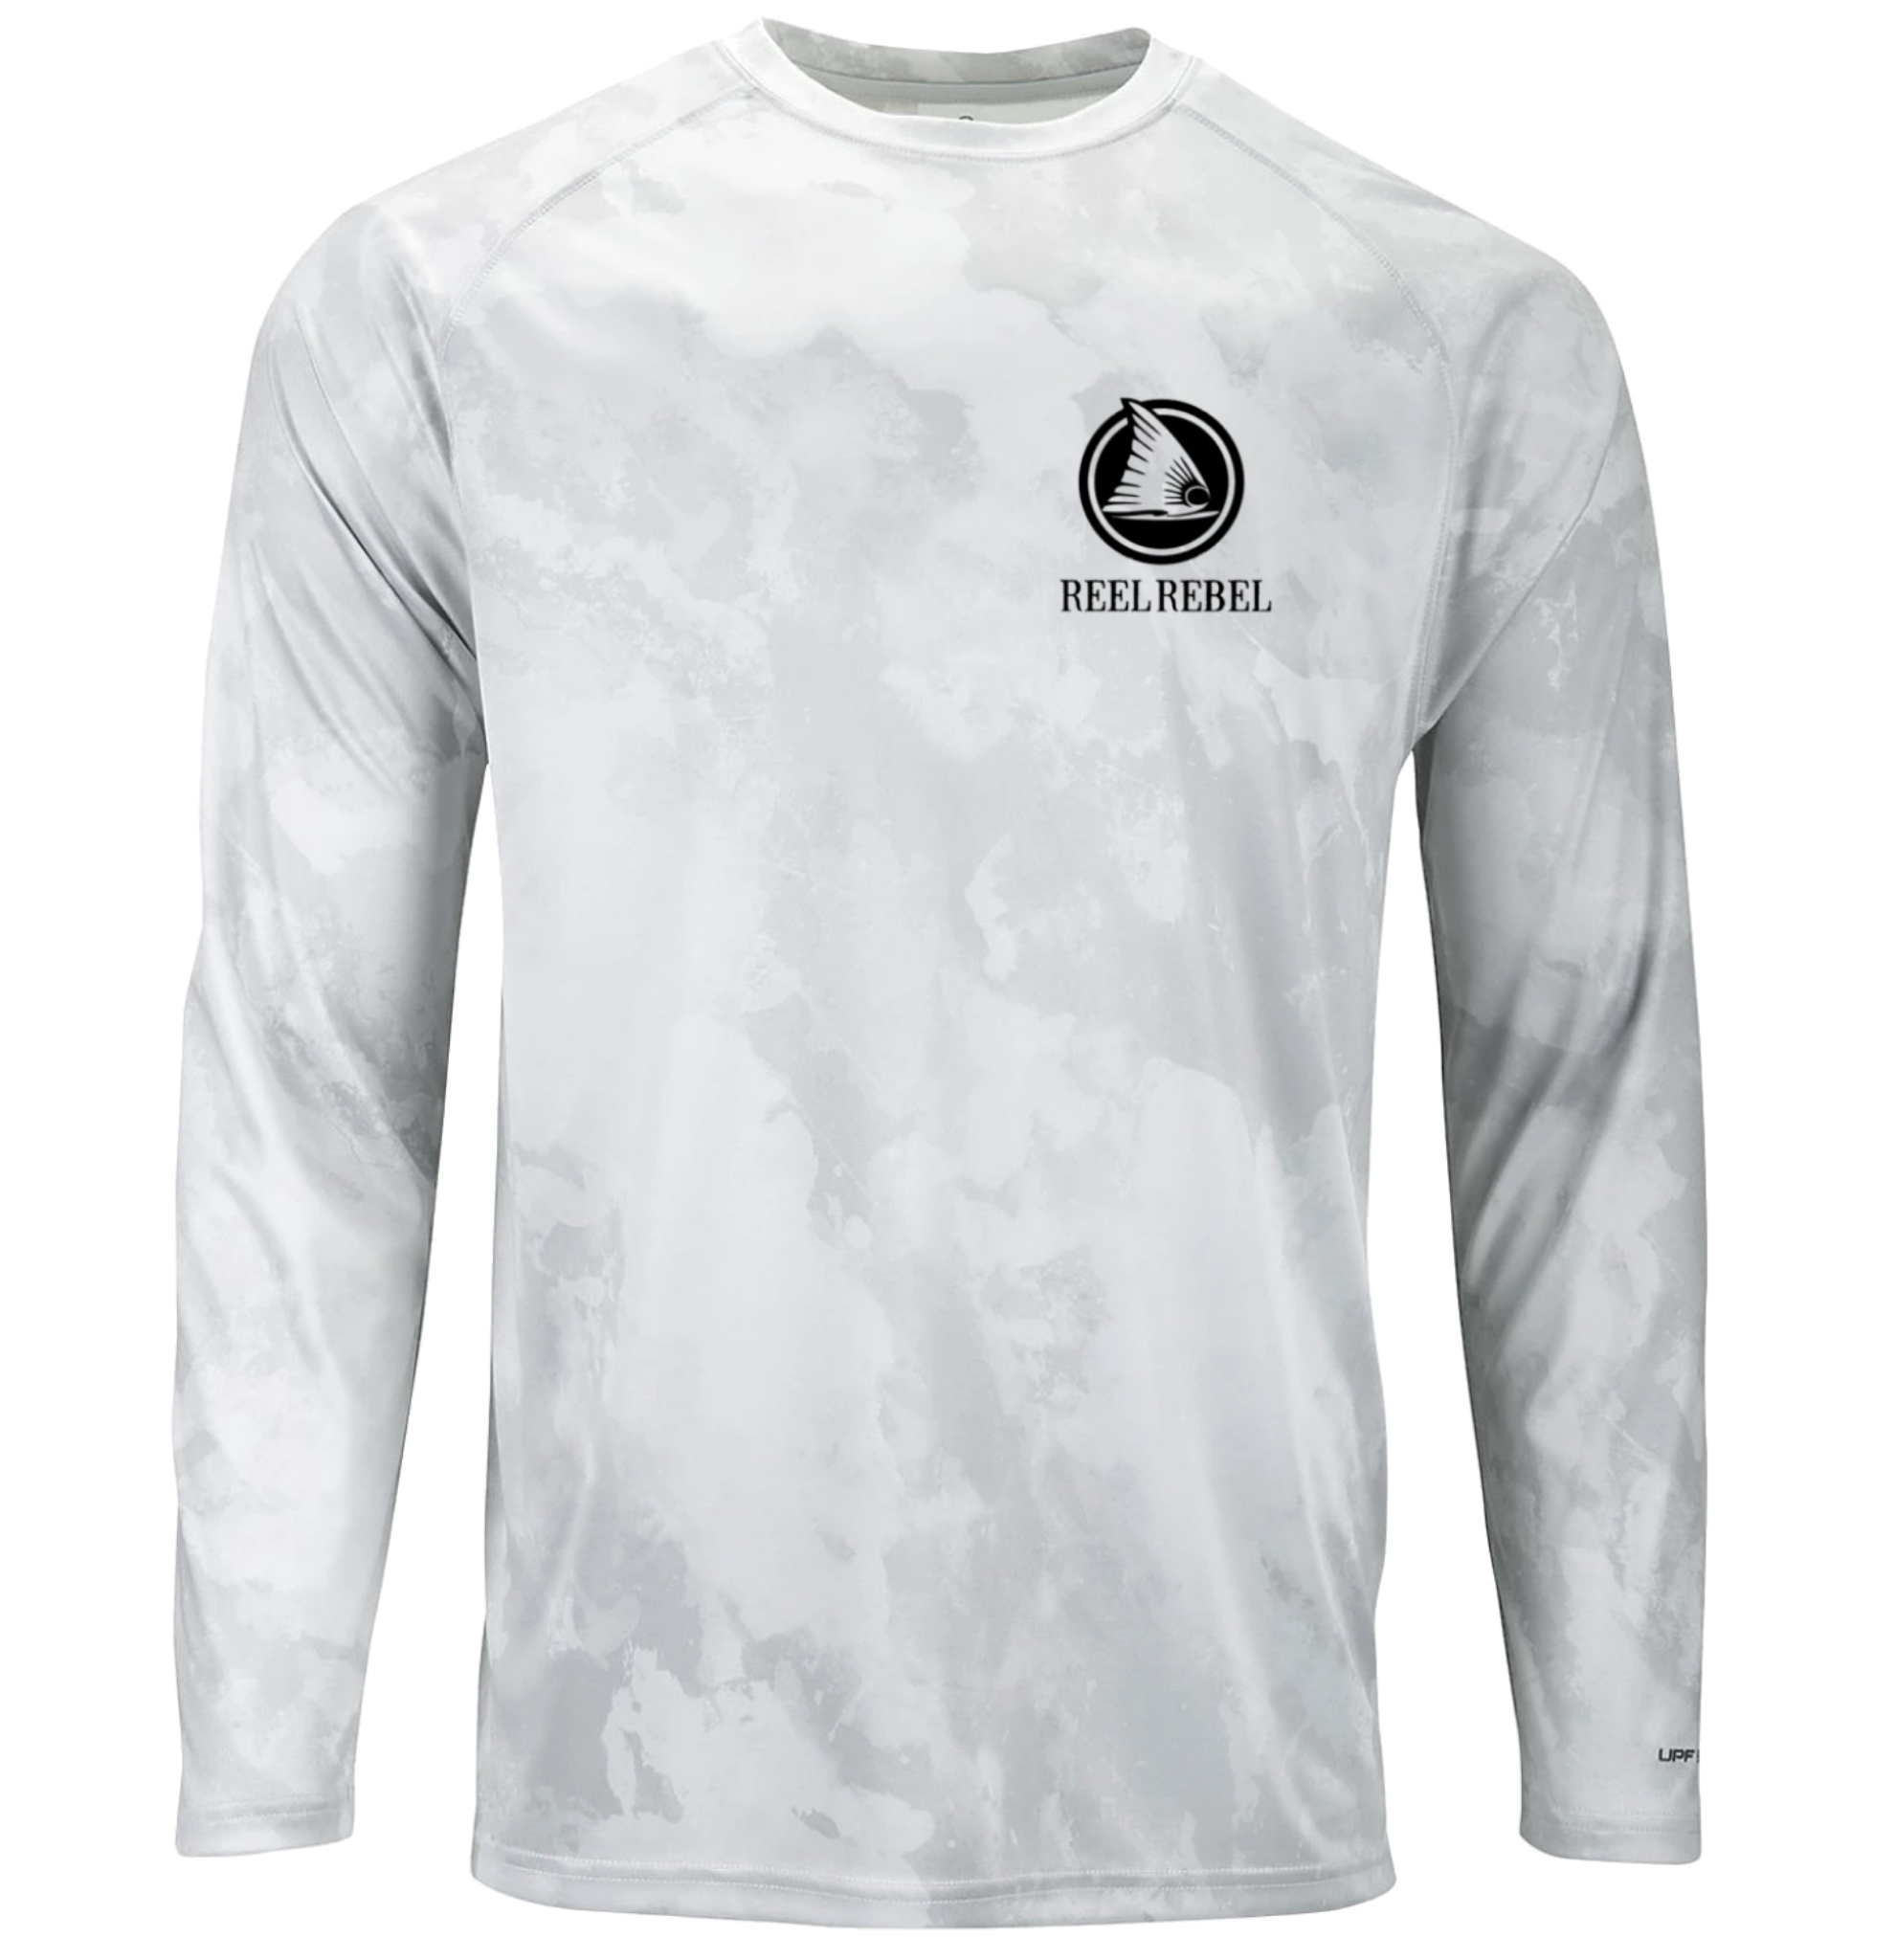 Rodeel Mens Loose-Fit Fishing T-Shirt Vented River Bluff Performance Long Sleeve Shirt UPF 50 Sleeve